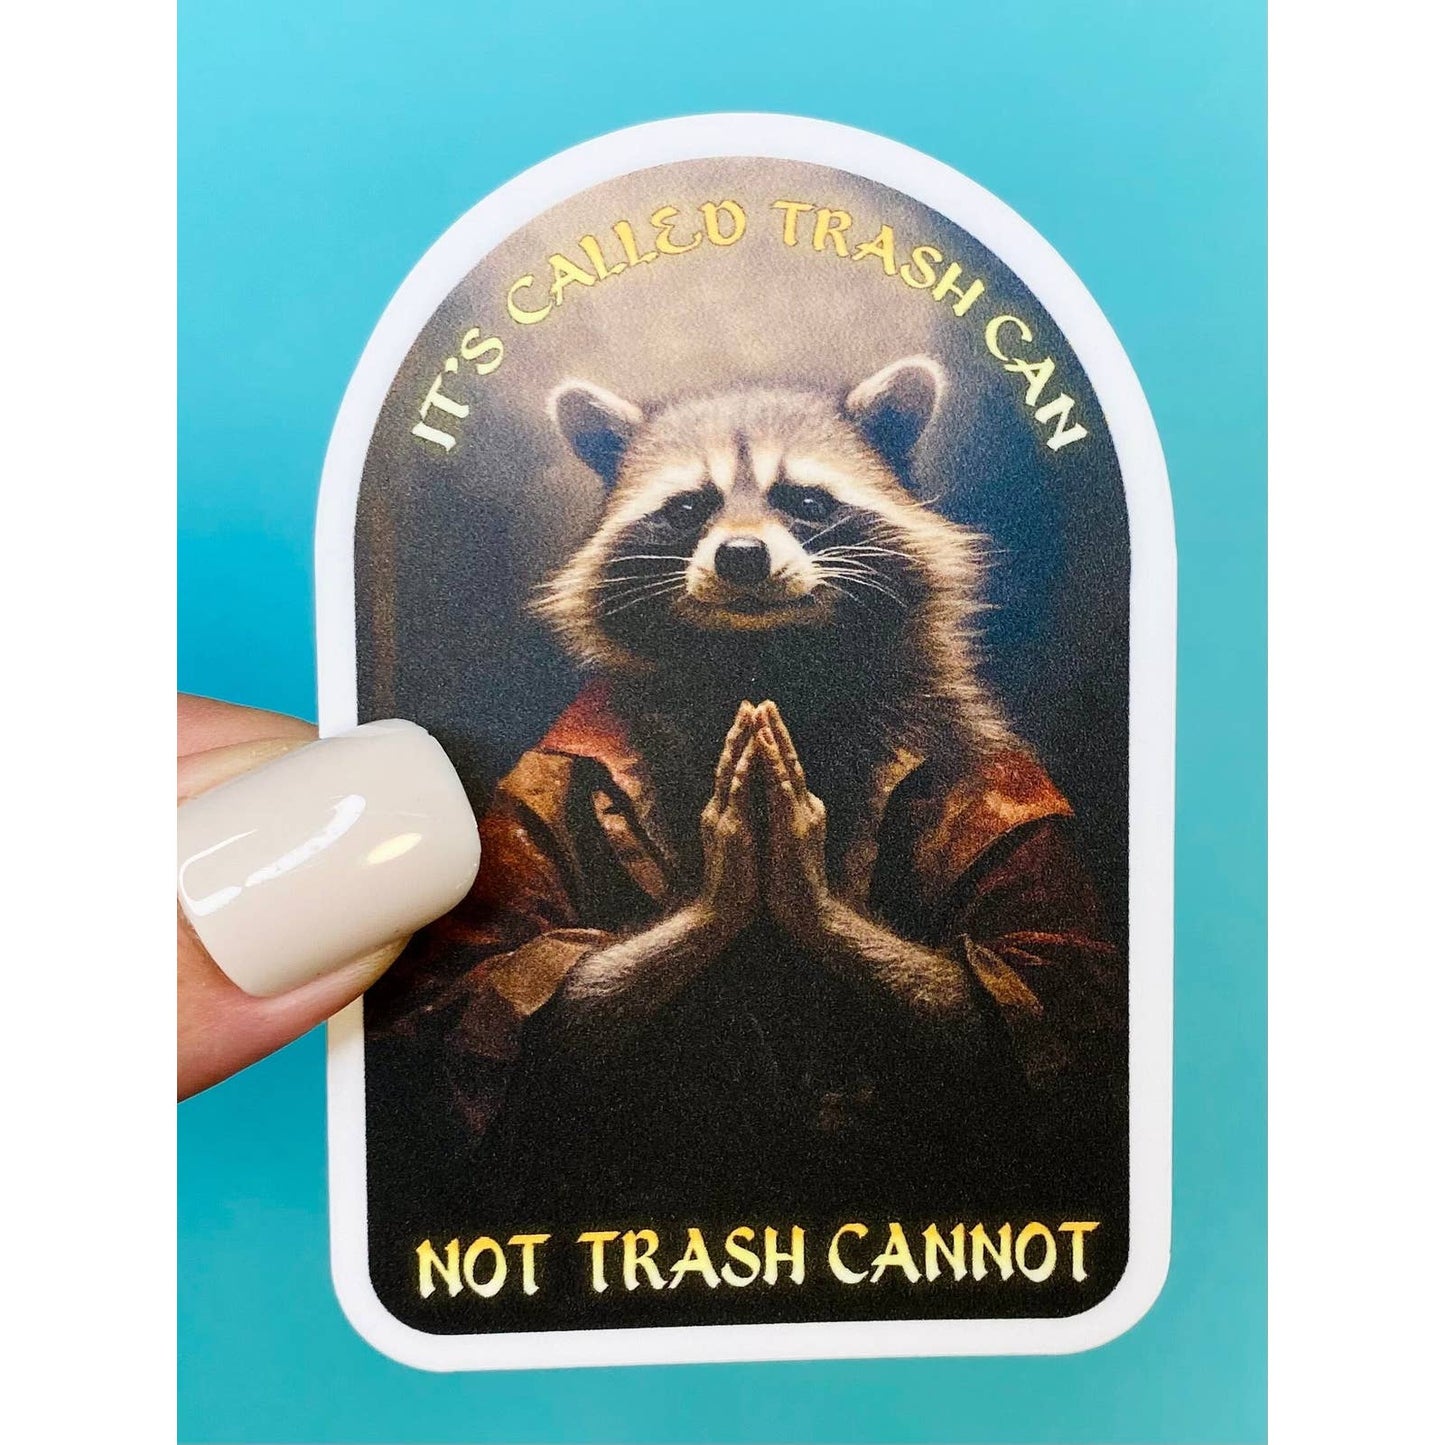 Funny Patron Saint of Trash Sticker - It's Trash Can Proverb Sticker